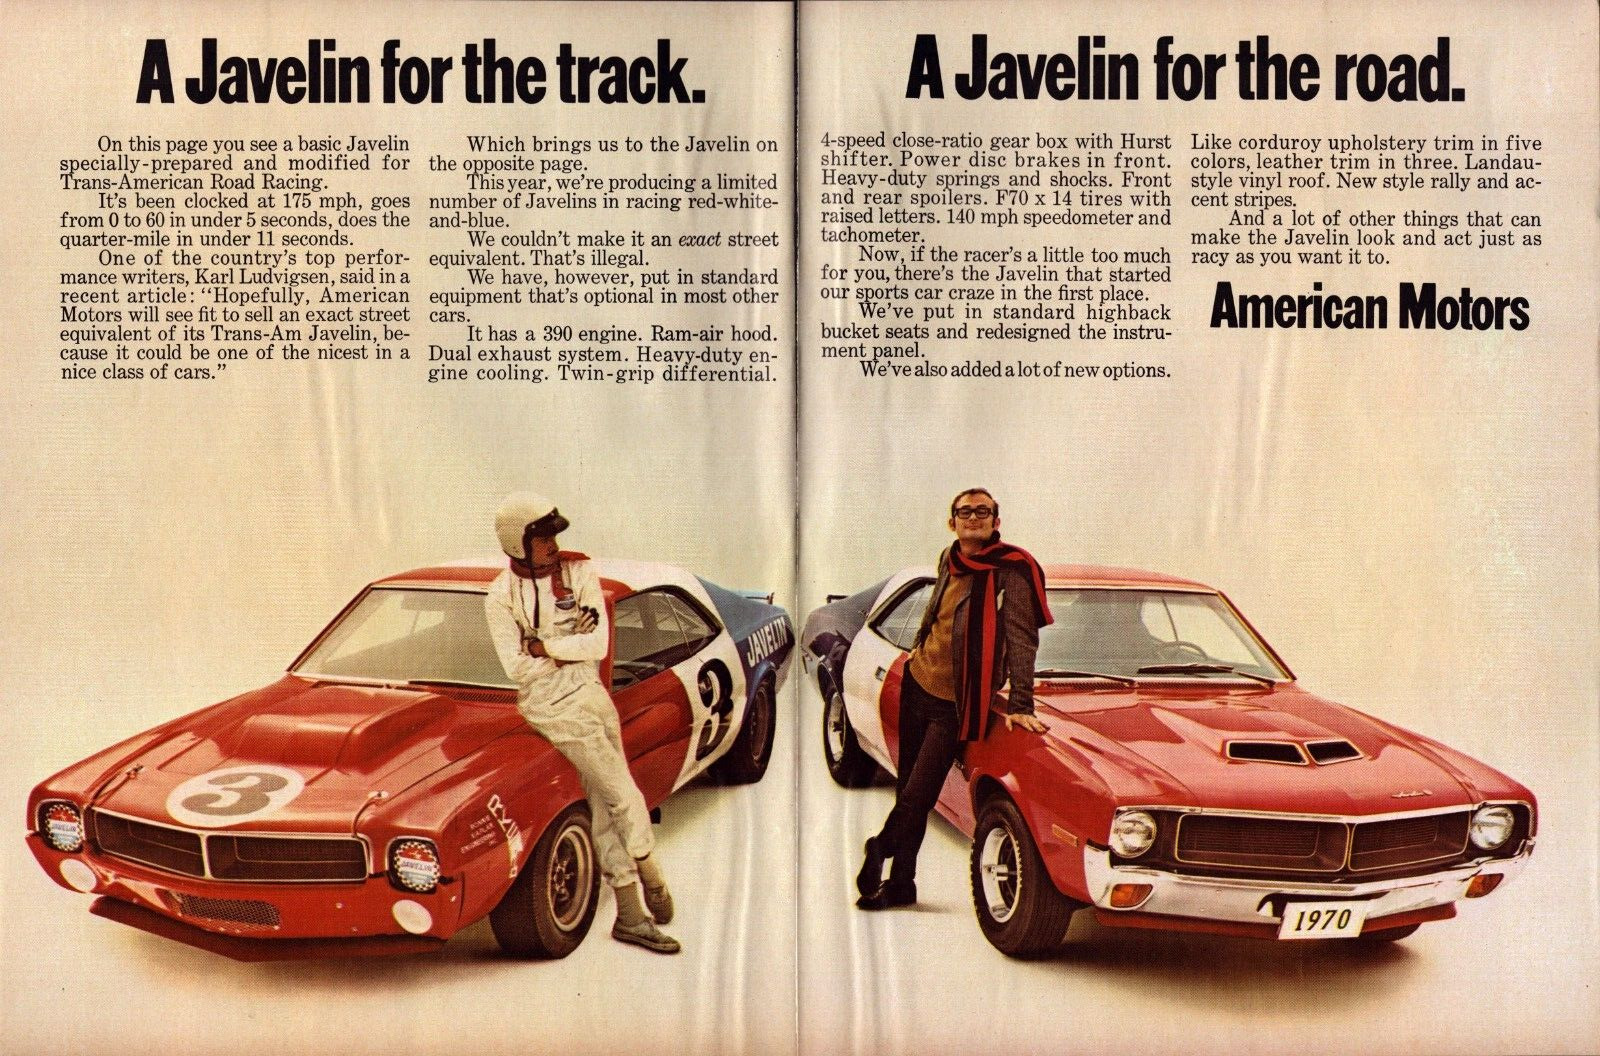 1970 Javelin American Motors Track & Road Oct 1969 Hot Rod Vintage Print Ad-C3.2